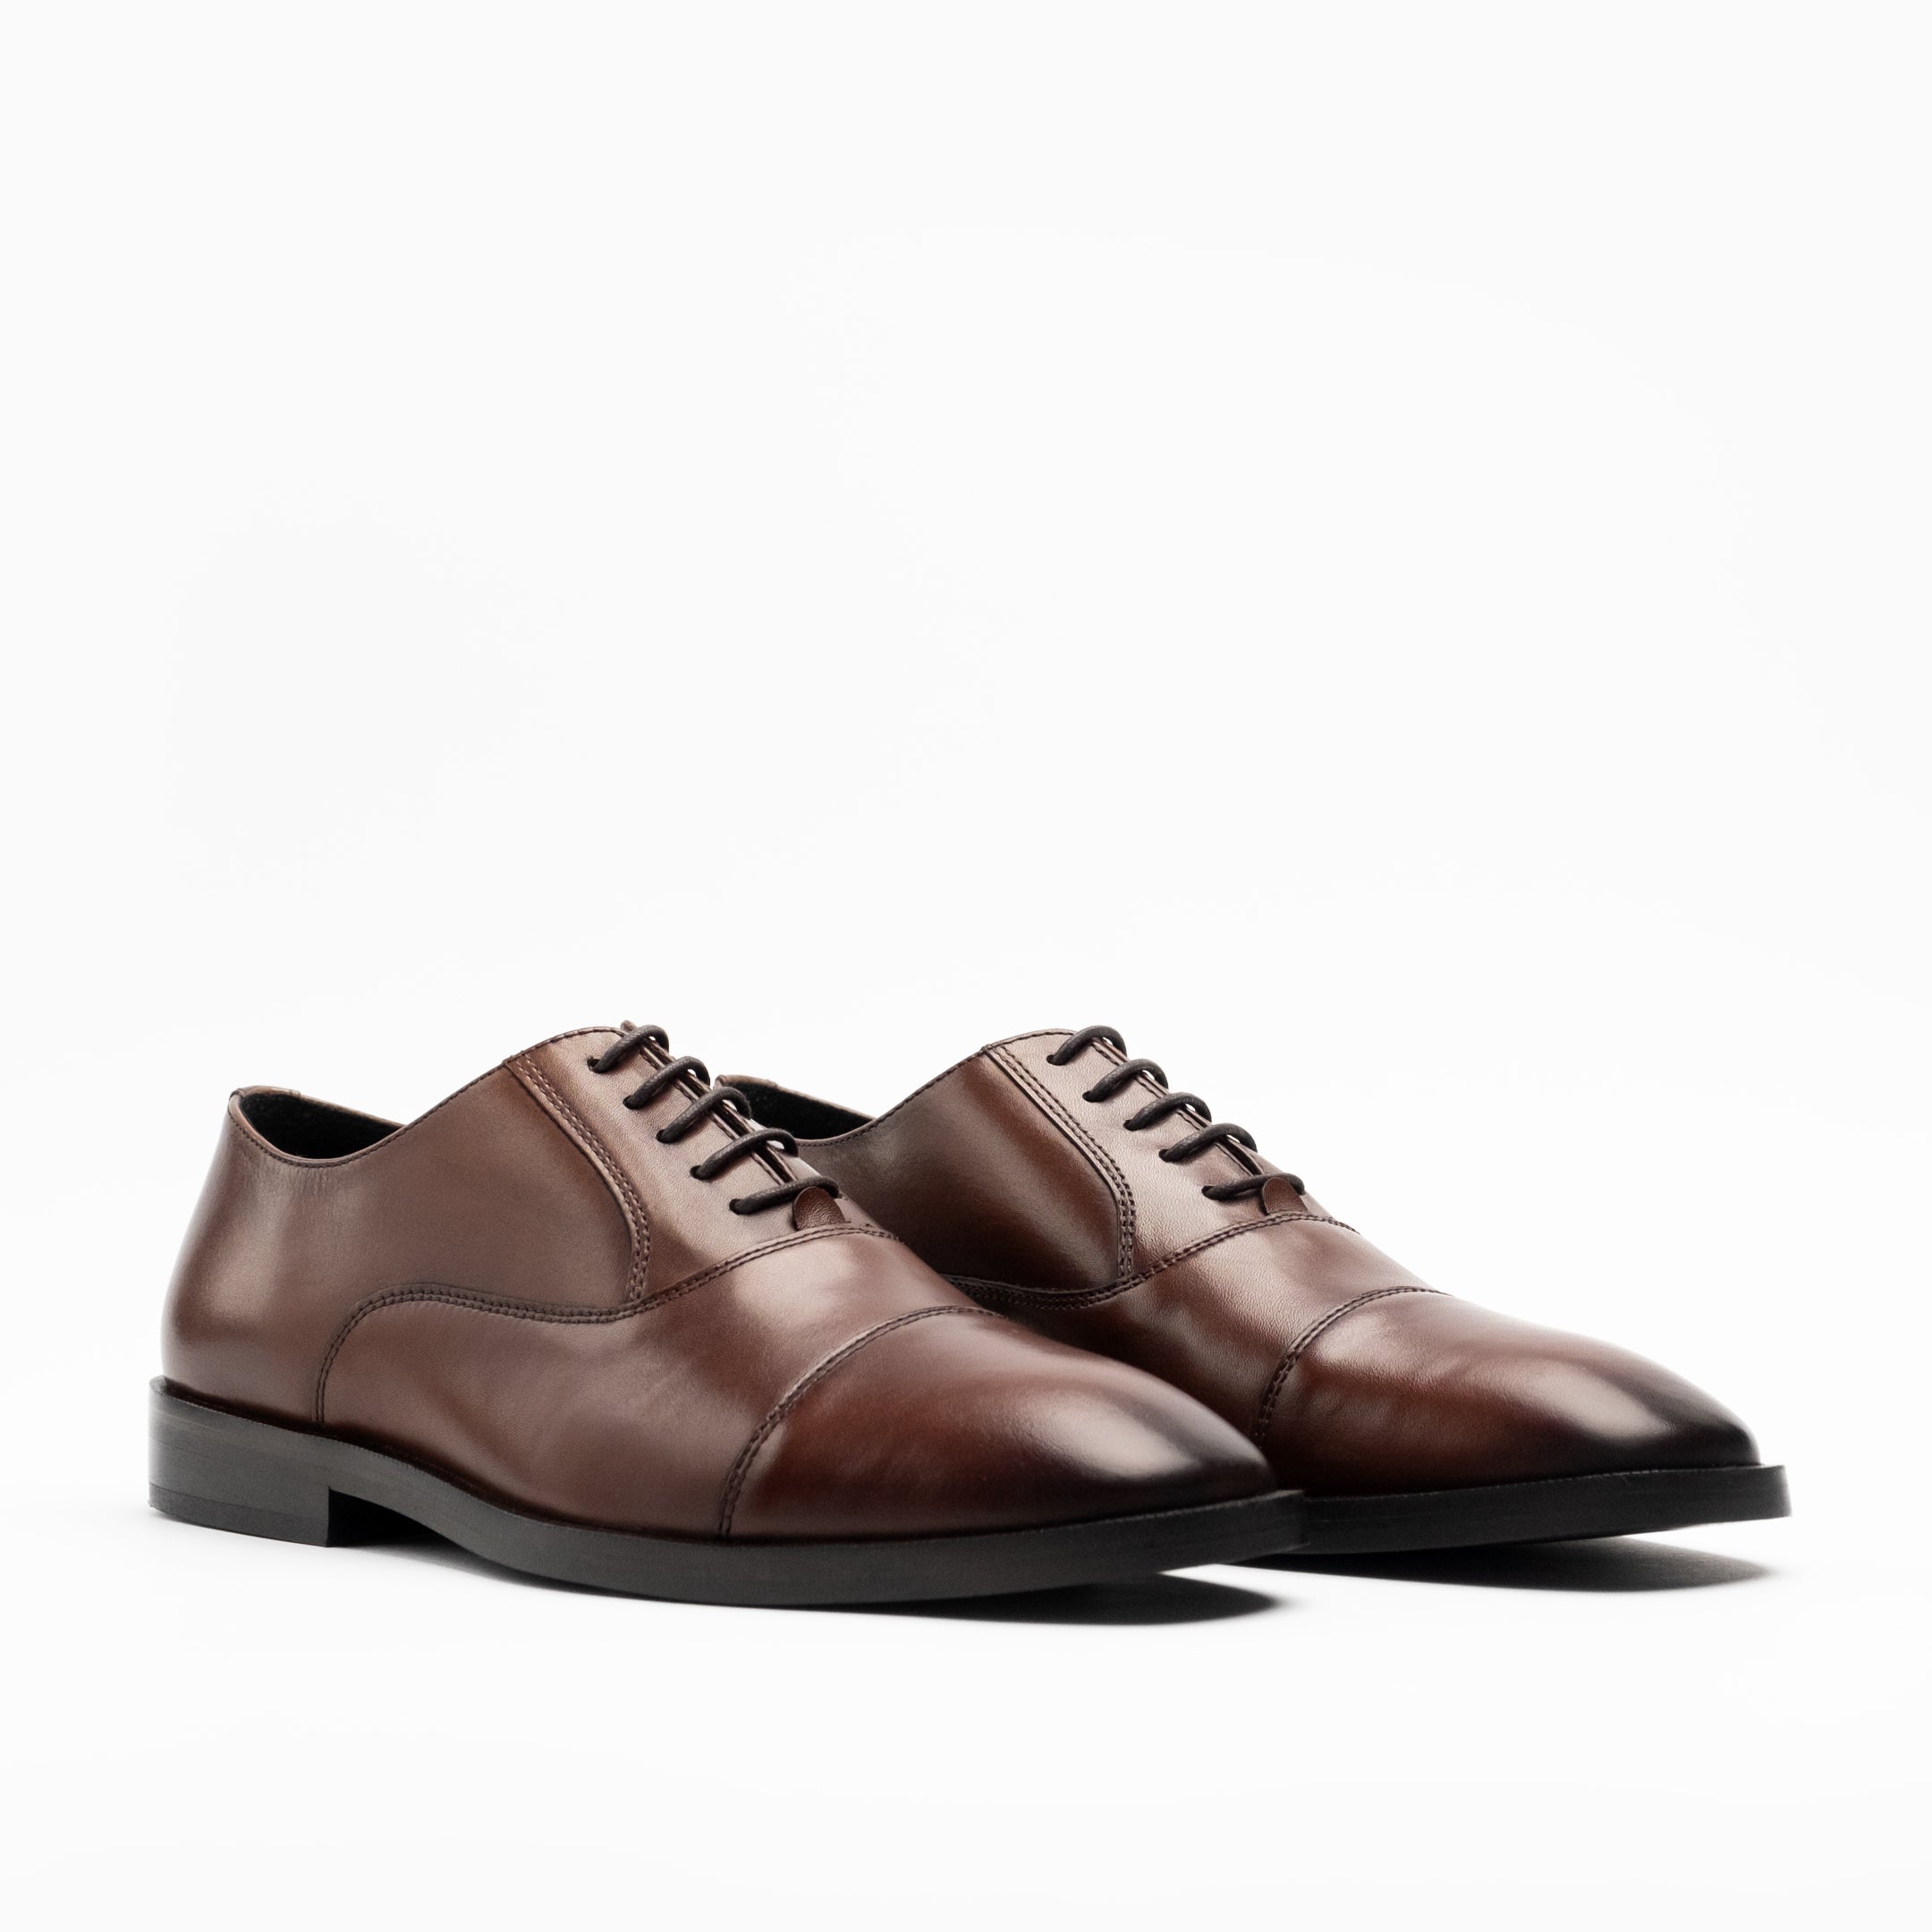 Walk London Mens Alex Toe Cap Shoe in Brown Leather